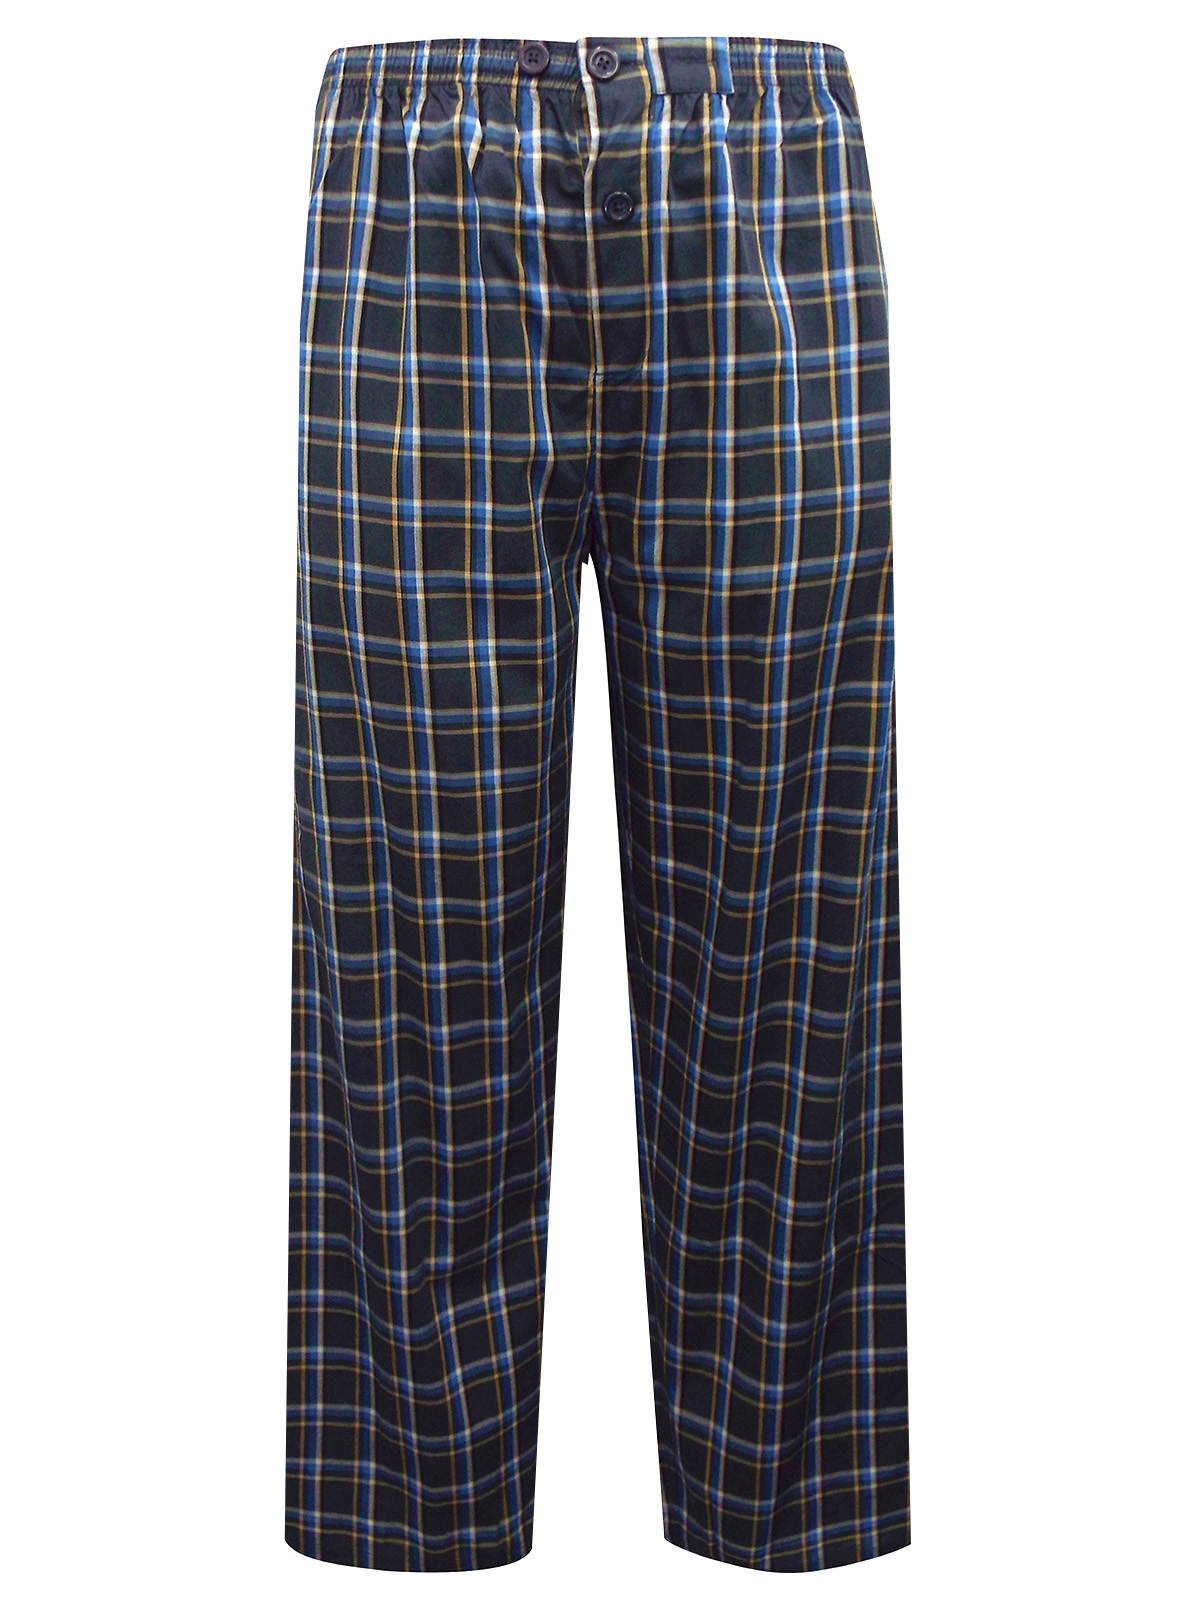 Marks and Spencer - - M&5 GRANITE Mens Cotton Blend Checked Pyjamas ...